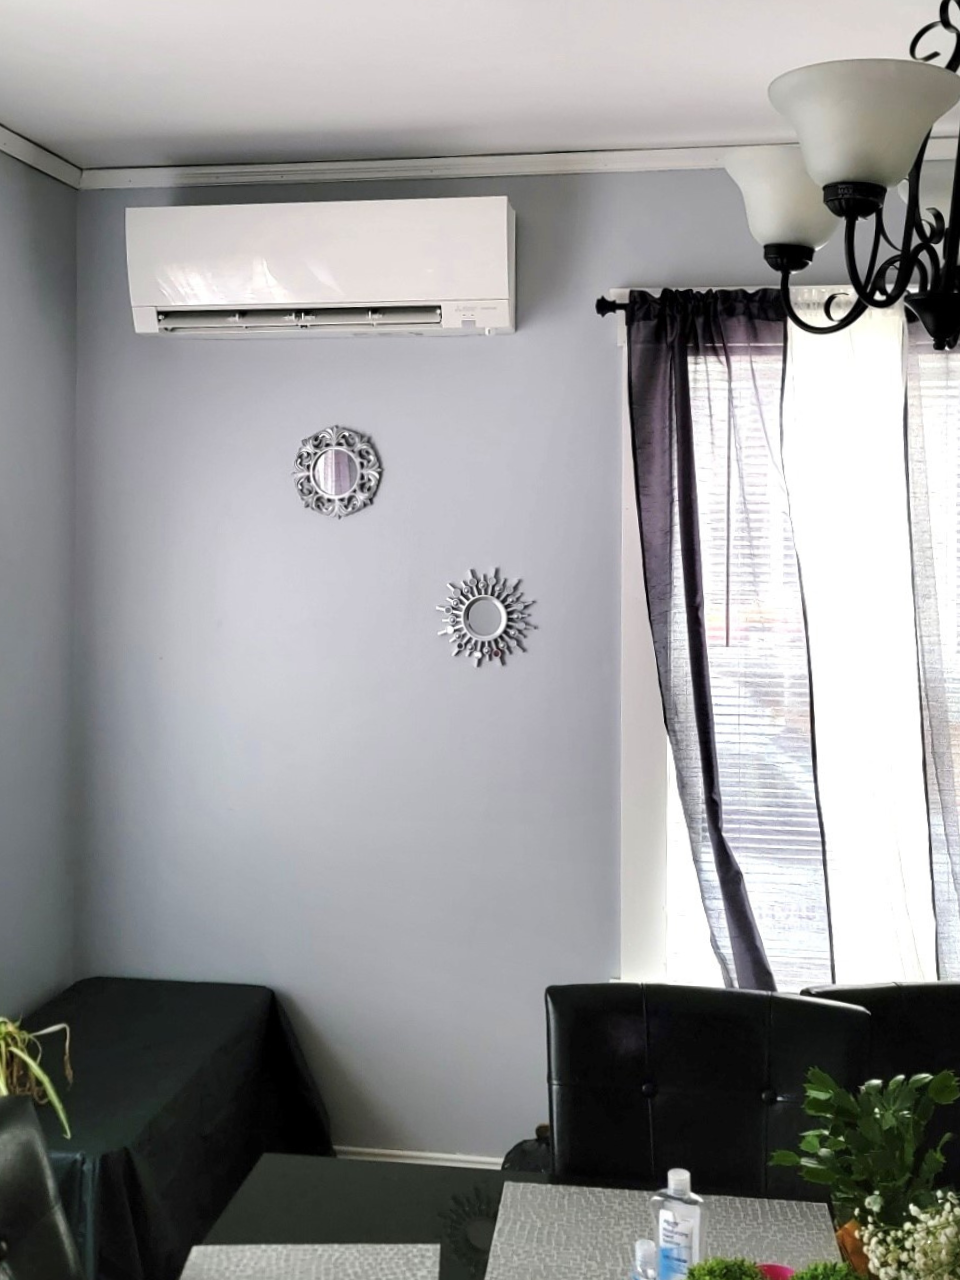 Wall-mounted mini-split heat pump system installed by Jay Moody HVAC.